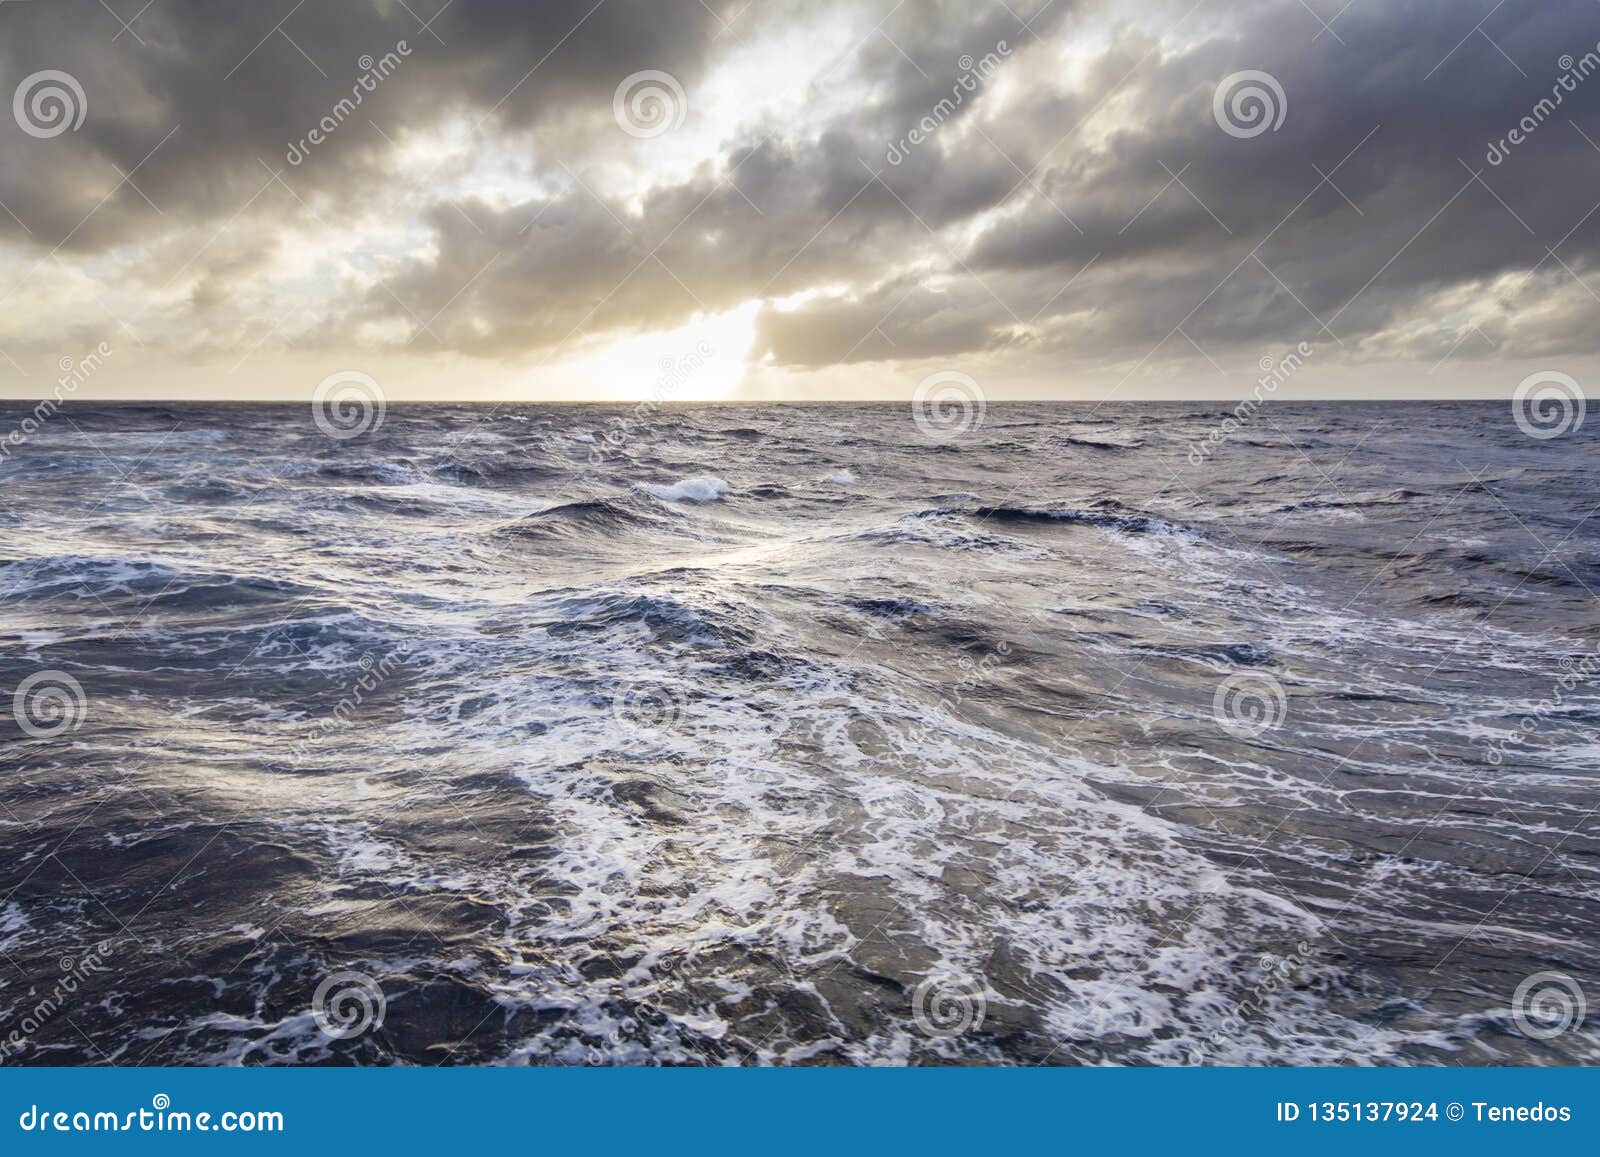 cruising at stormy seas